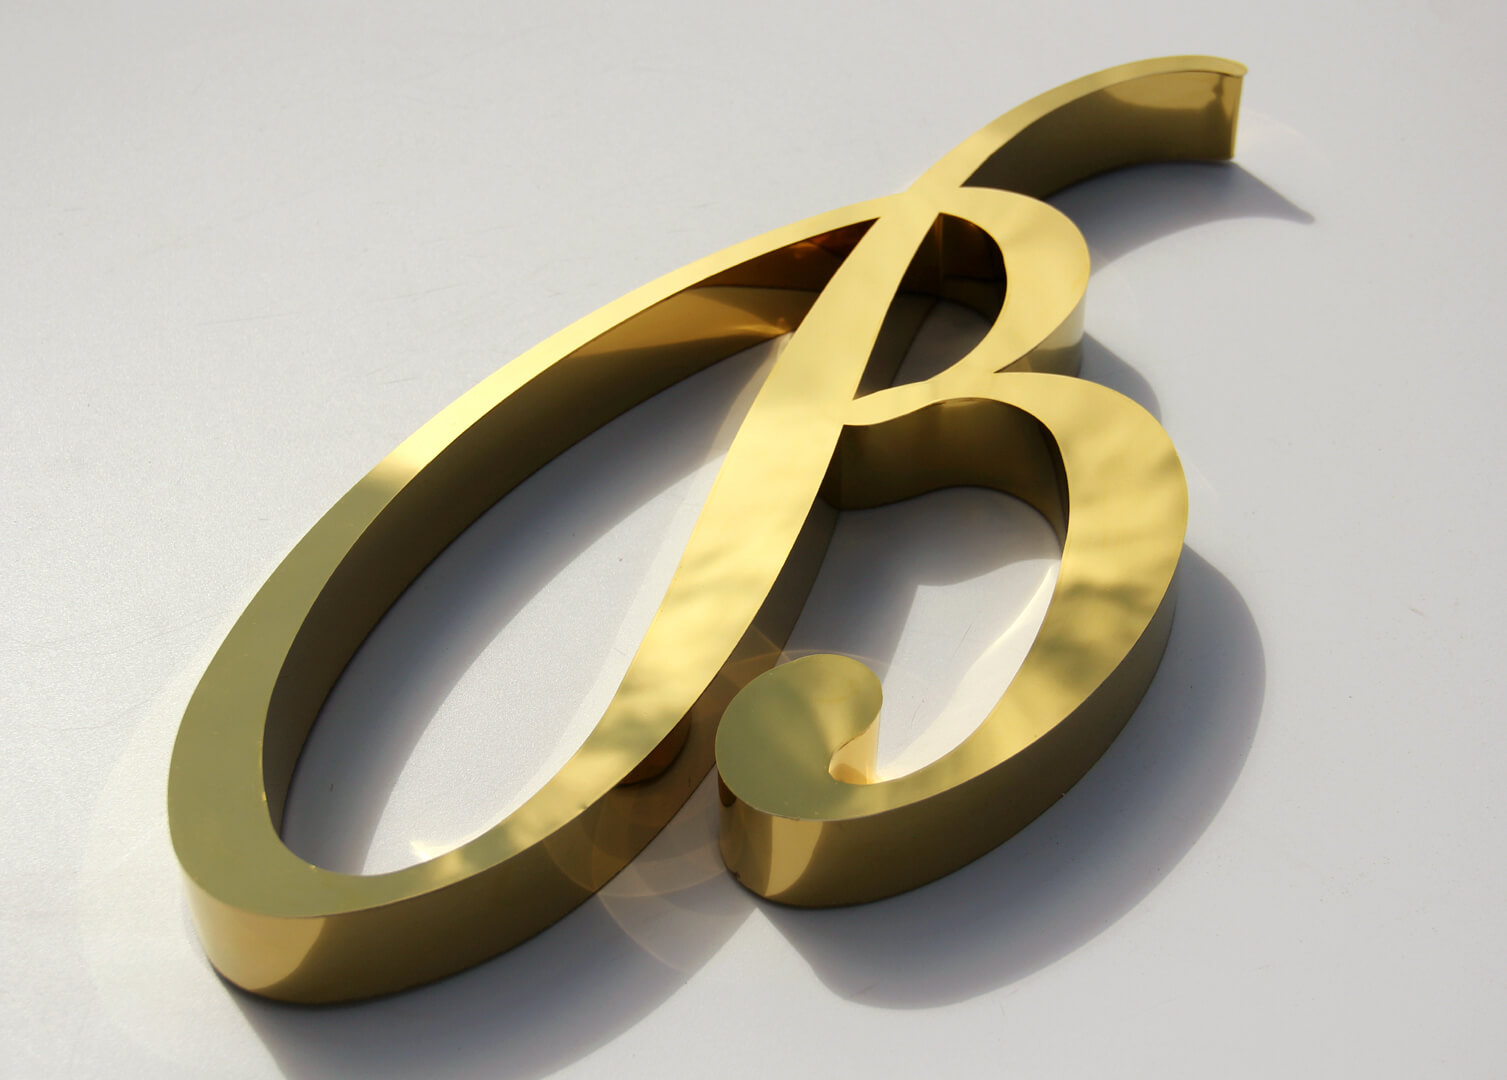 Lettre B en or - Lettre B dorée en acier inoxydable.